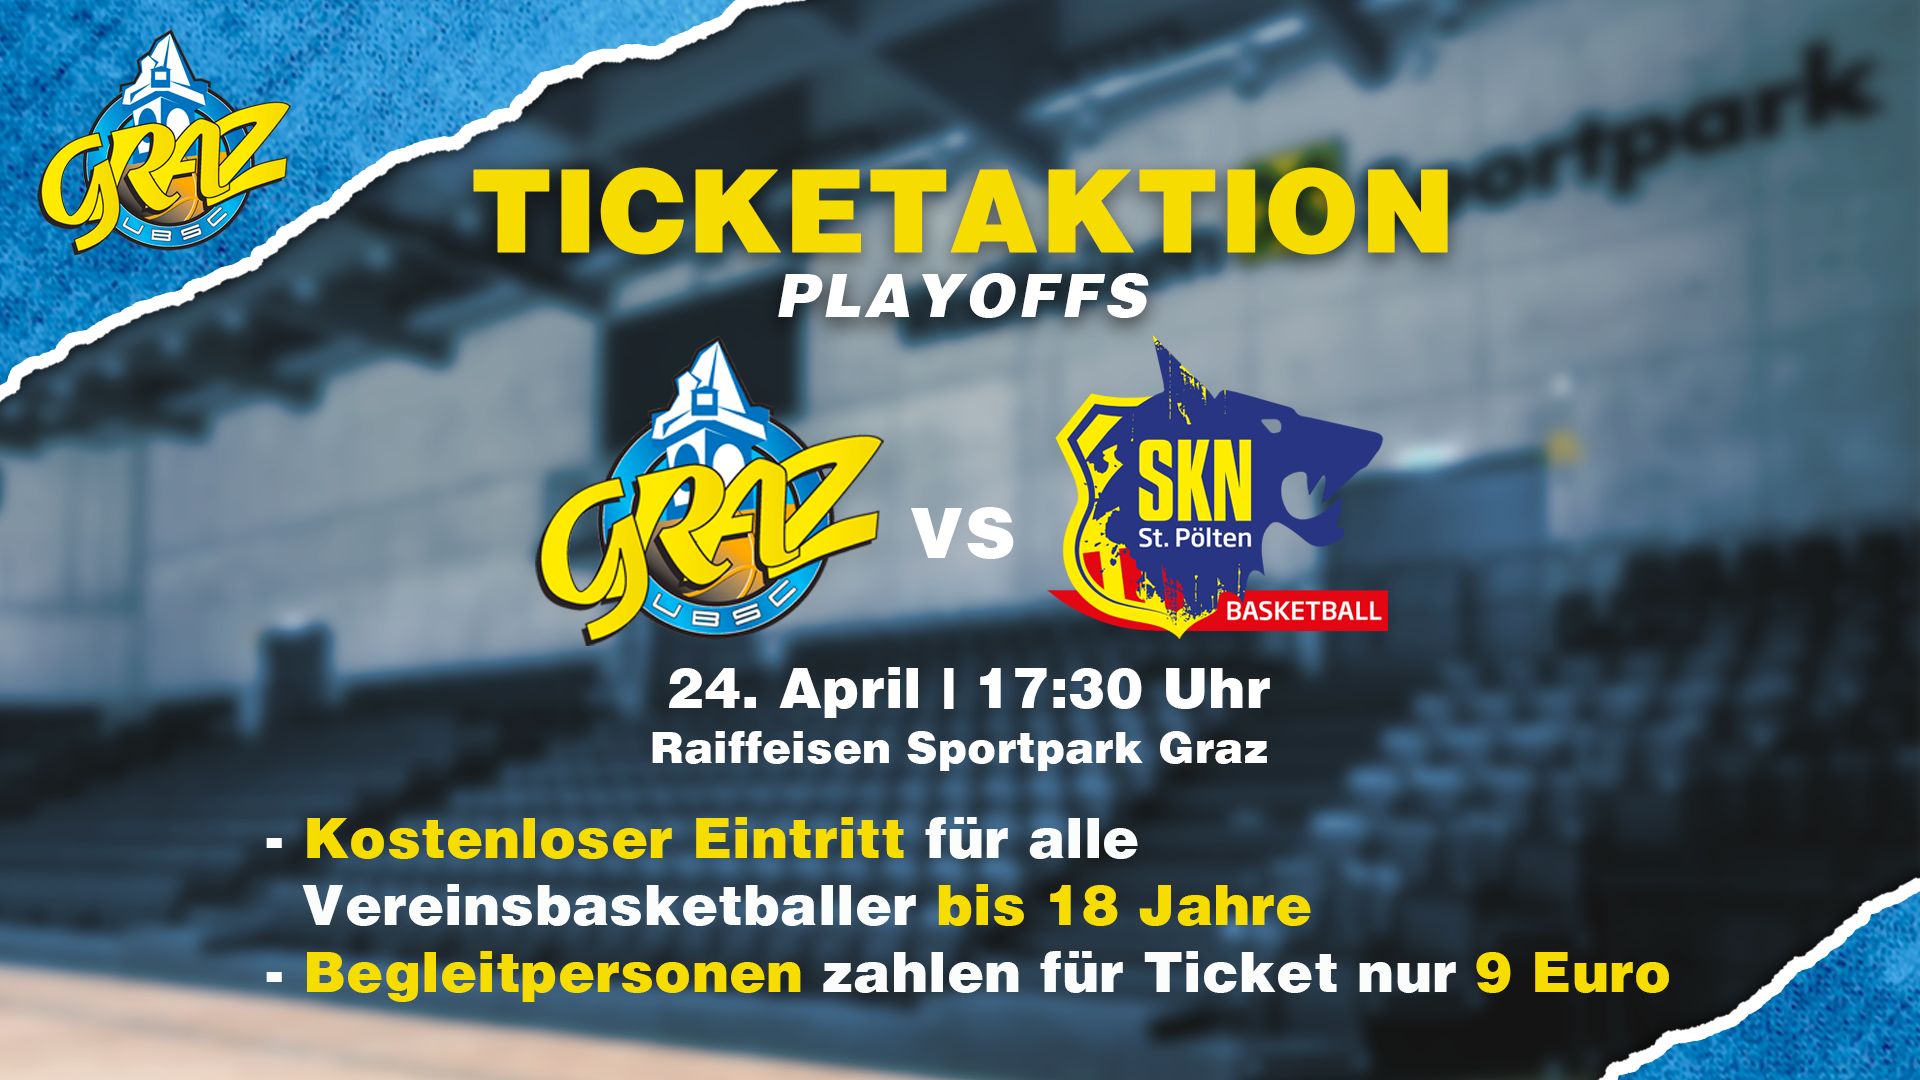 Ticketaktion UBSC Graz vs SKN St. Pölten